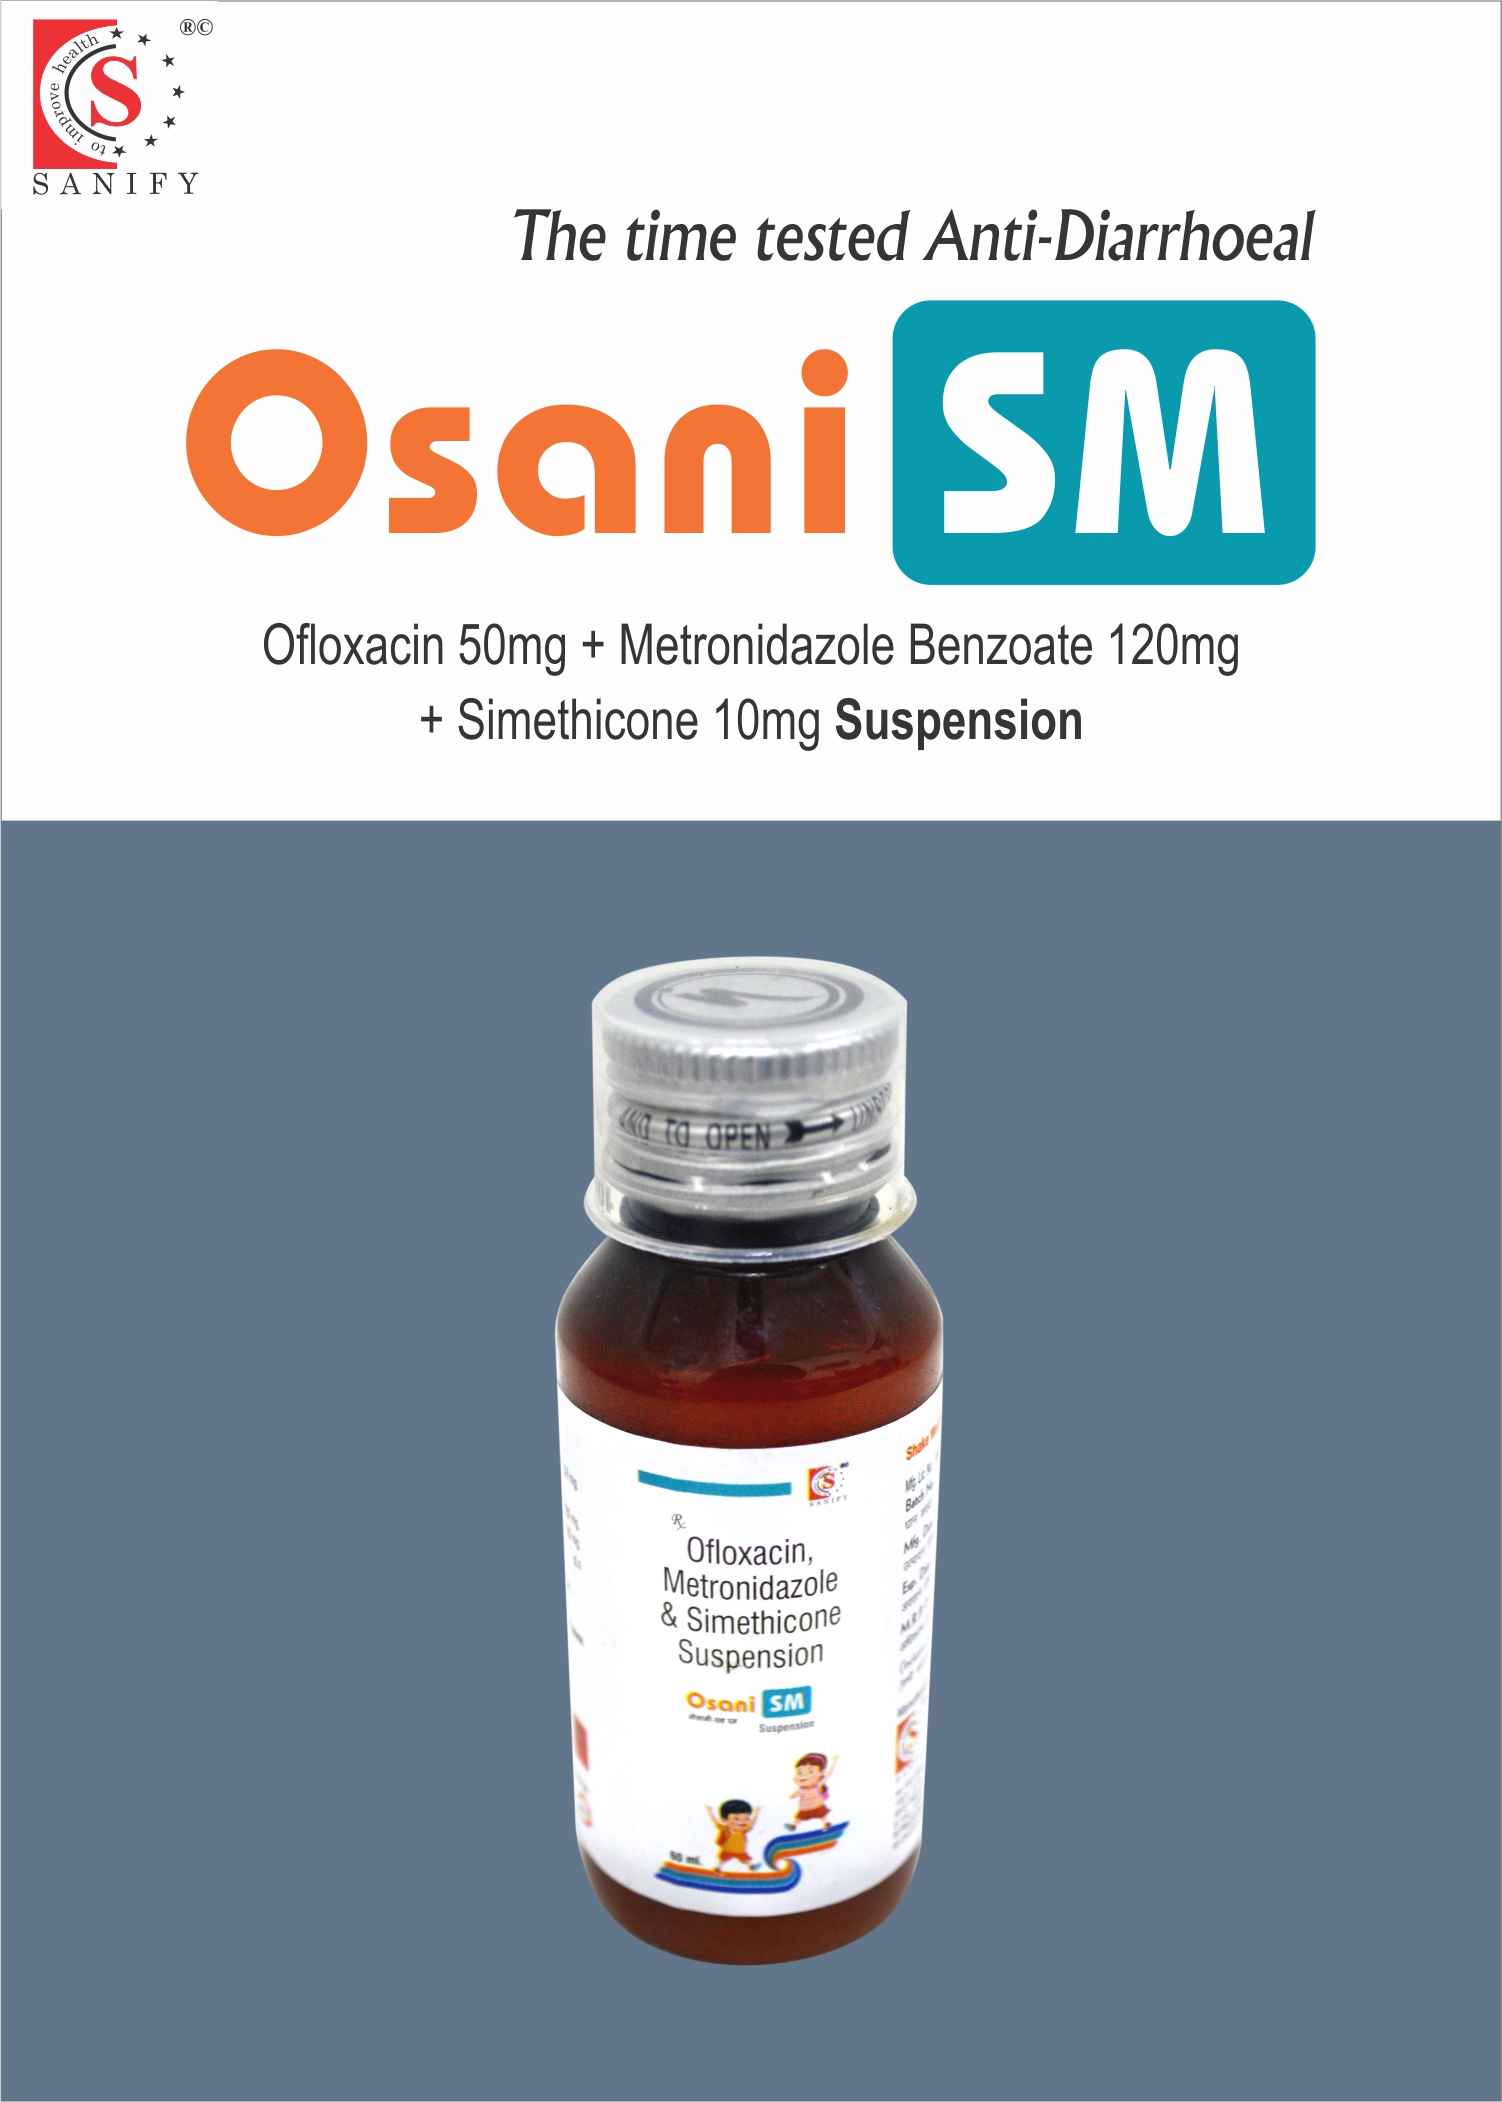 Ofloxacin 50 mg + Metronidazole Benzoate Eq. to Metronidazole 120 mg +Simethicone 10 mg